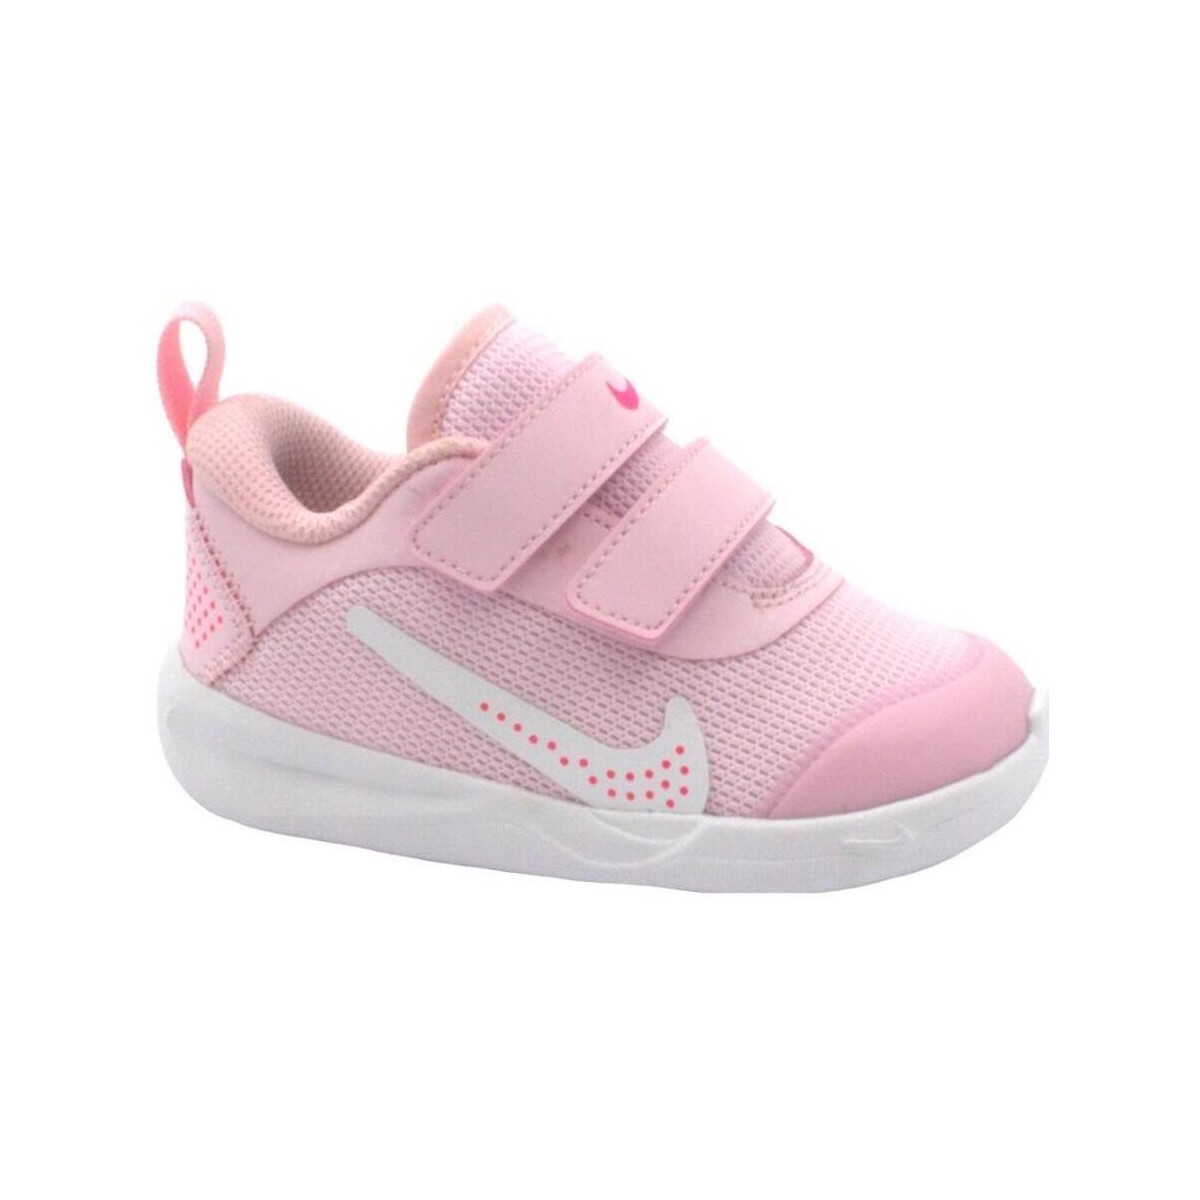 Chaussures Enfant Multisport Nike NIK-CCC-DM9028-600 Rose